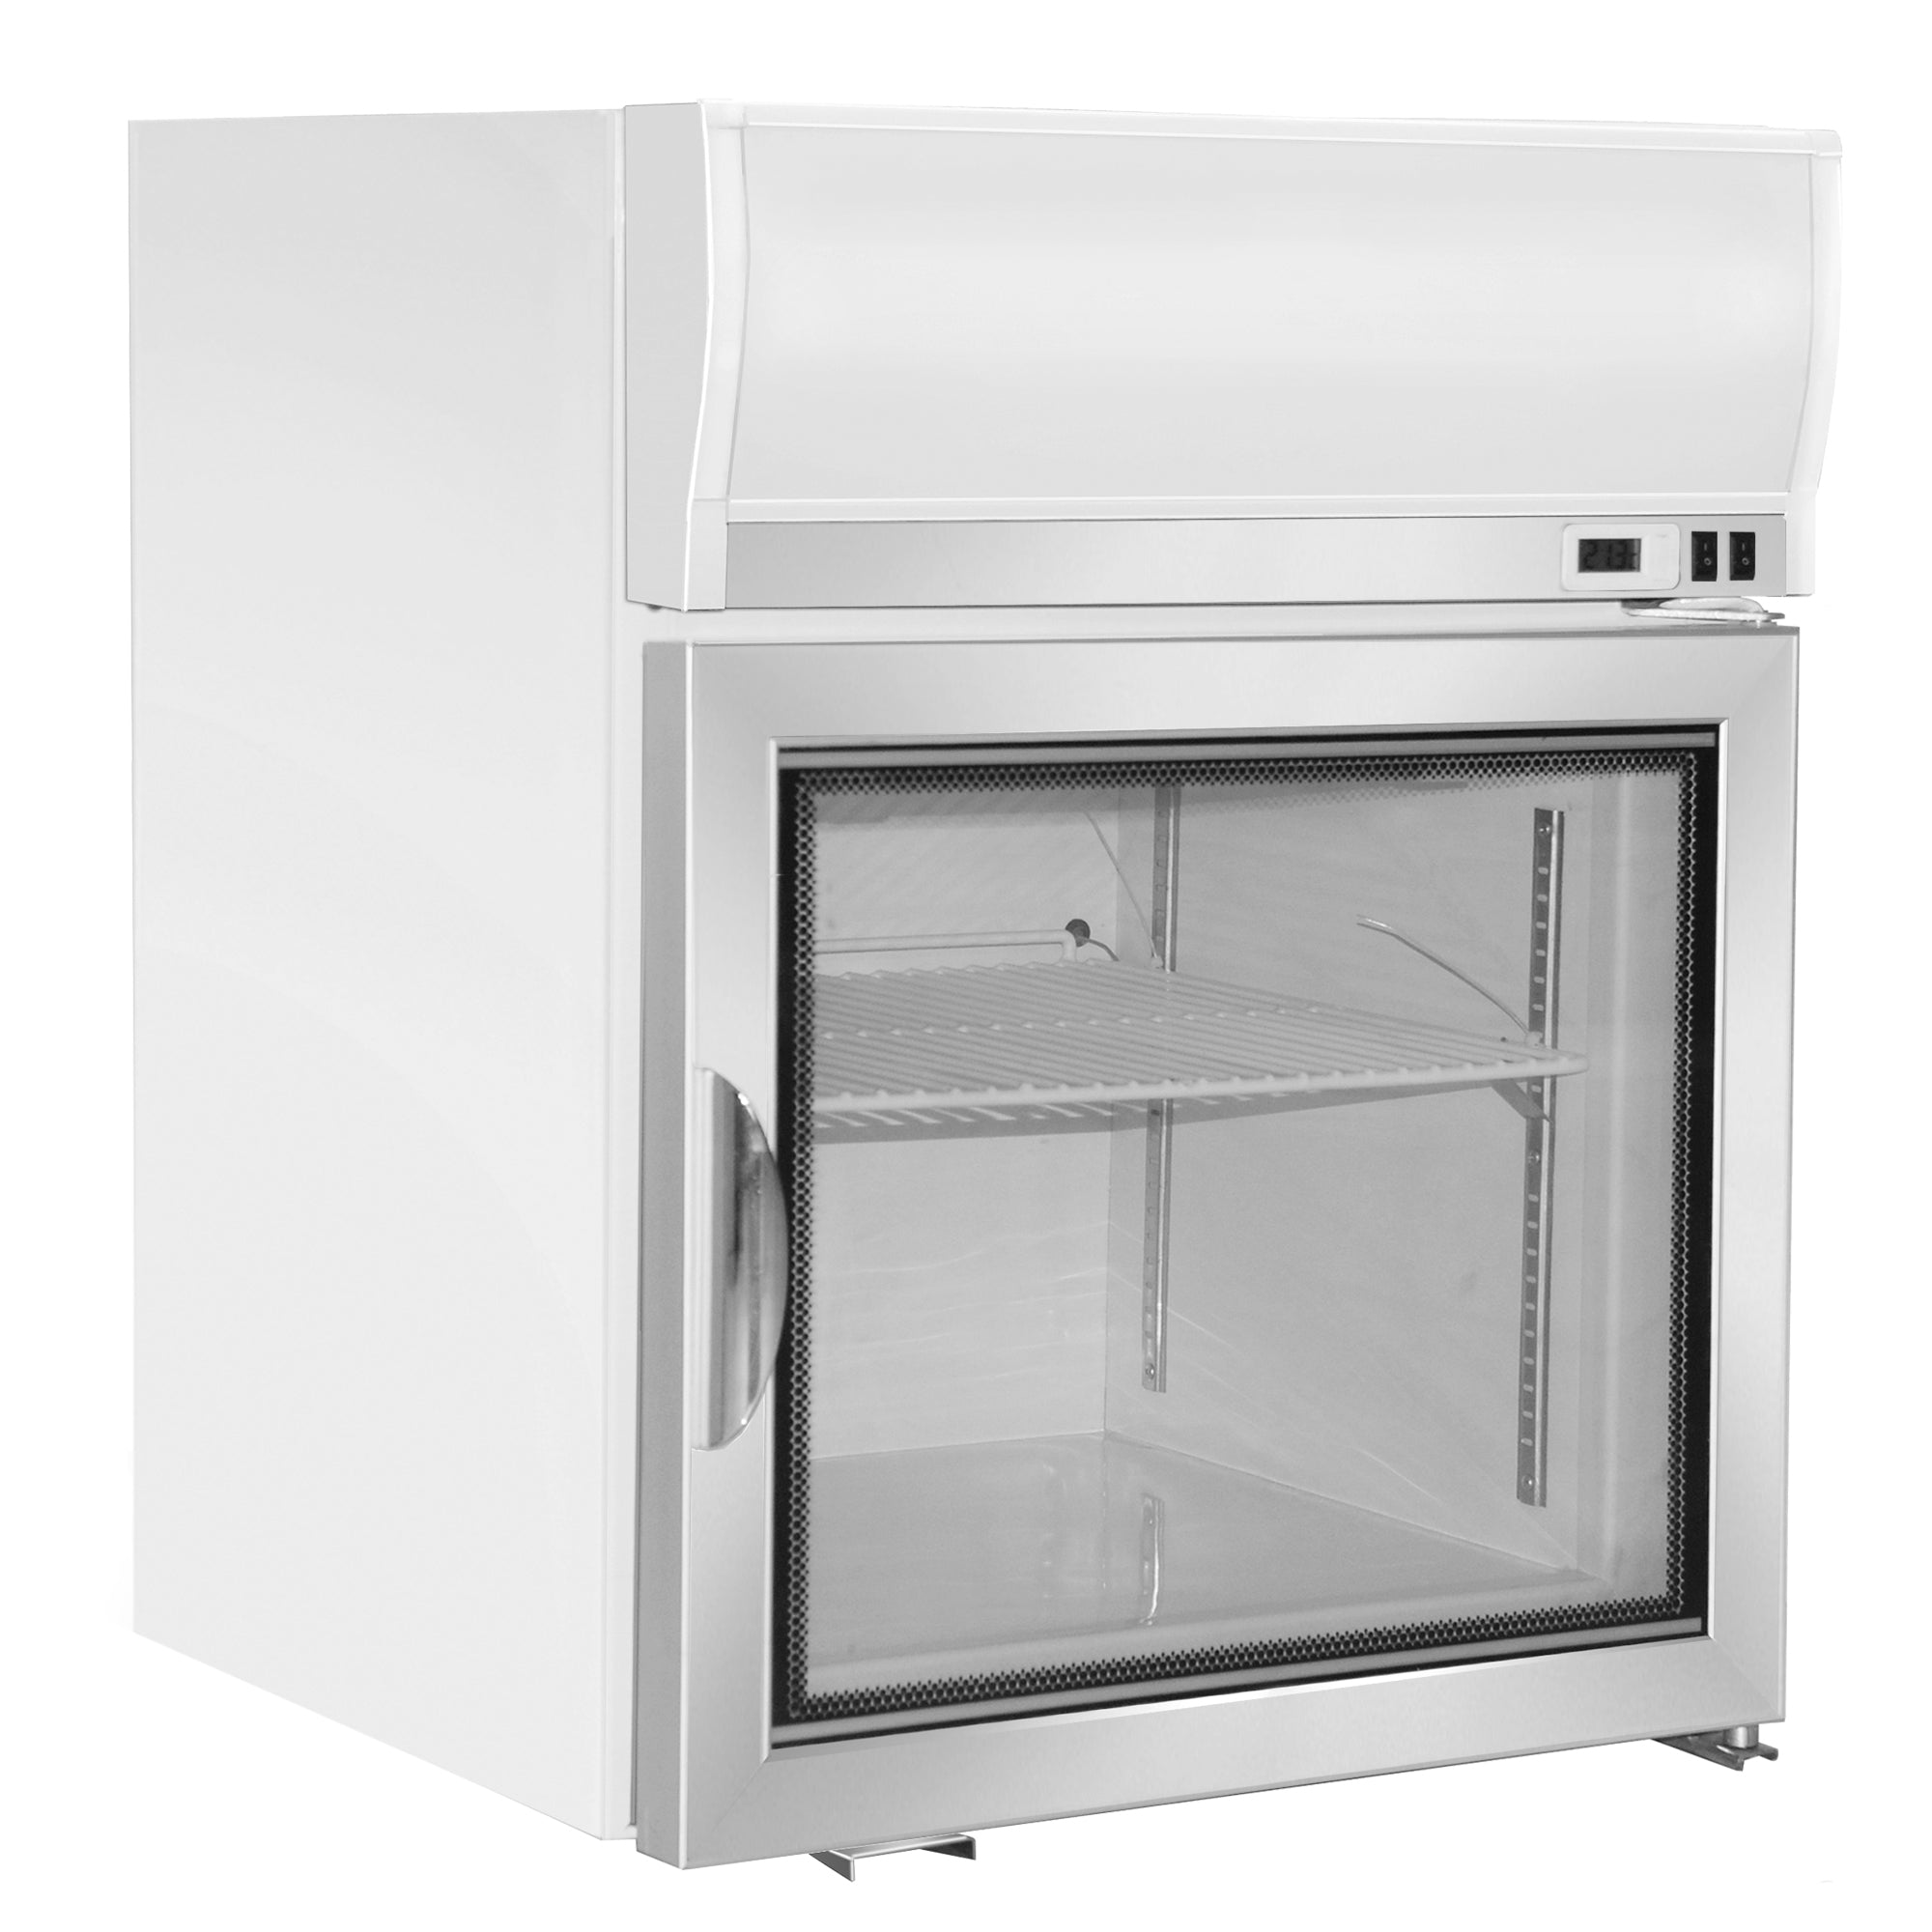 Maxx Cold - MXM1-2.5FHC, Maxx Cold Merchandiser Freezer, Countertop, 22.4"W, 2.1 cu. ft. Storage Capacity, in White